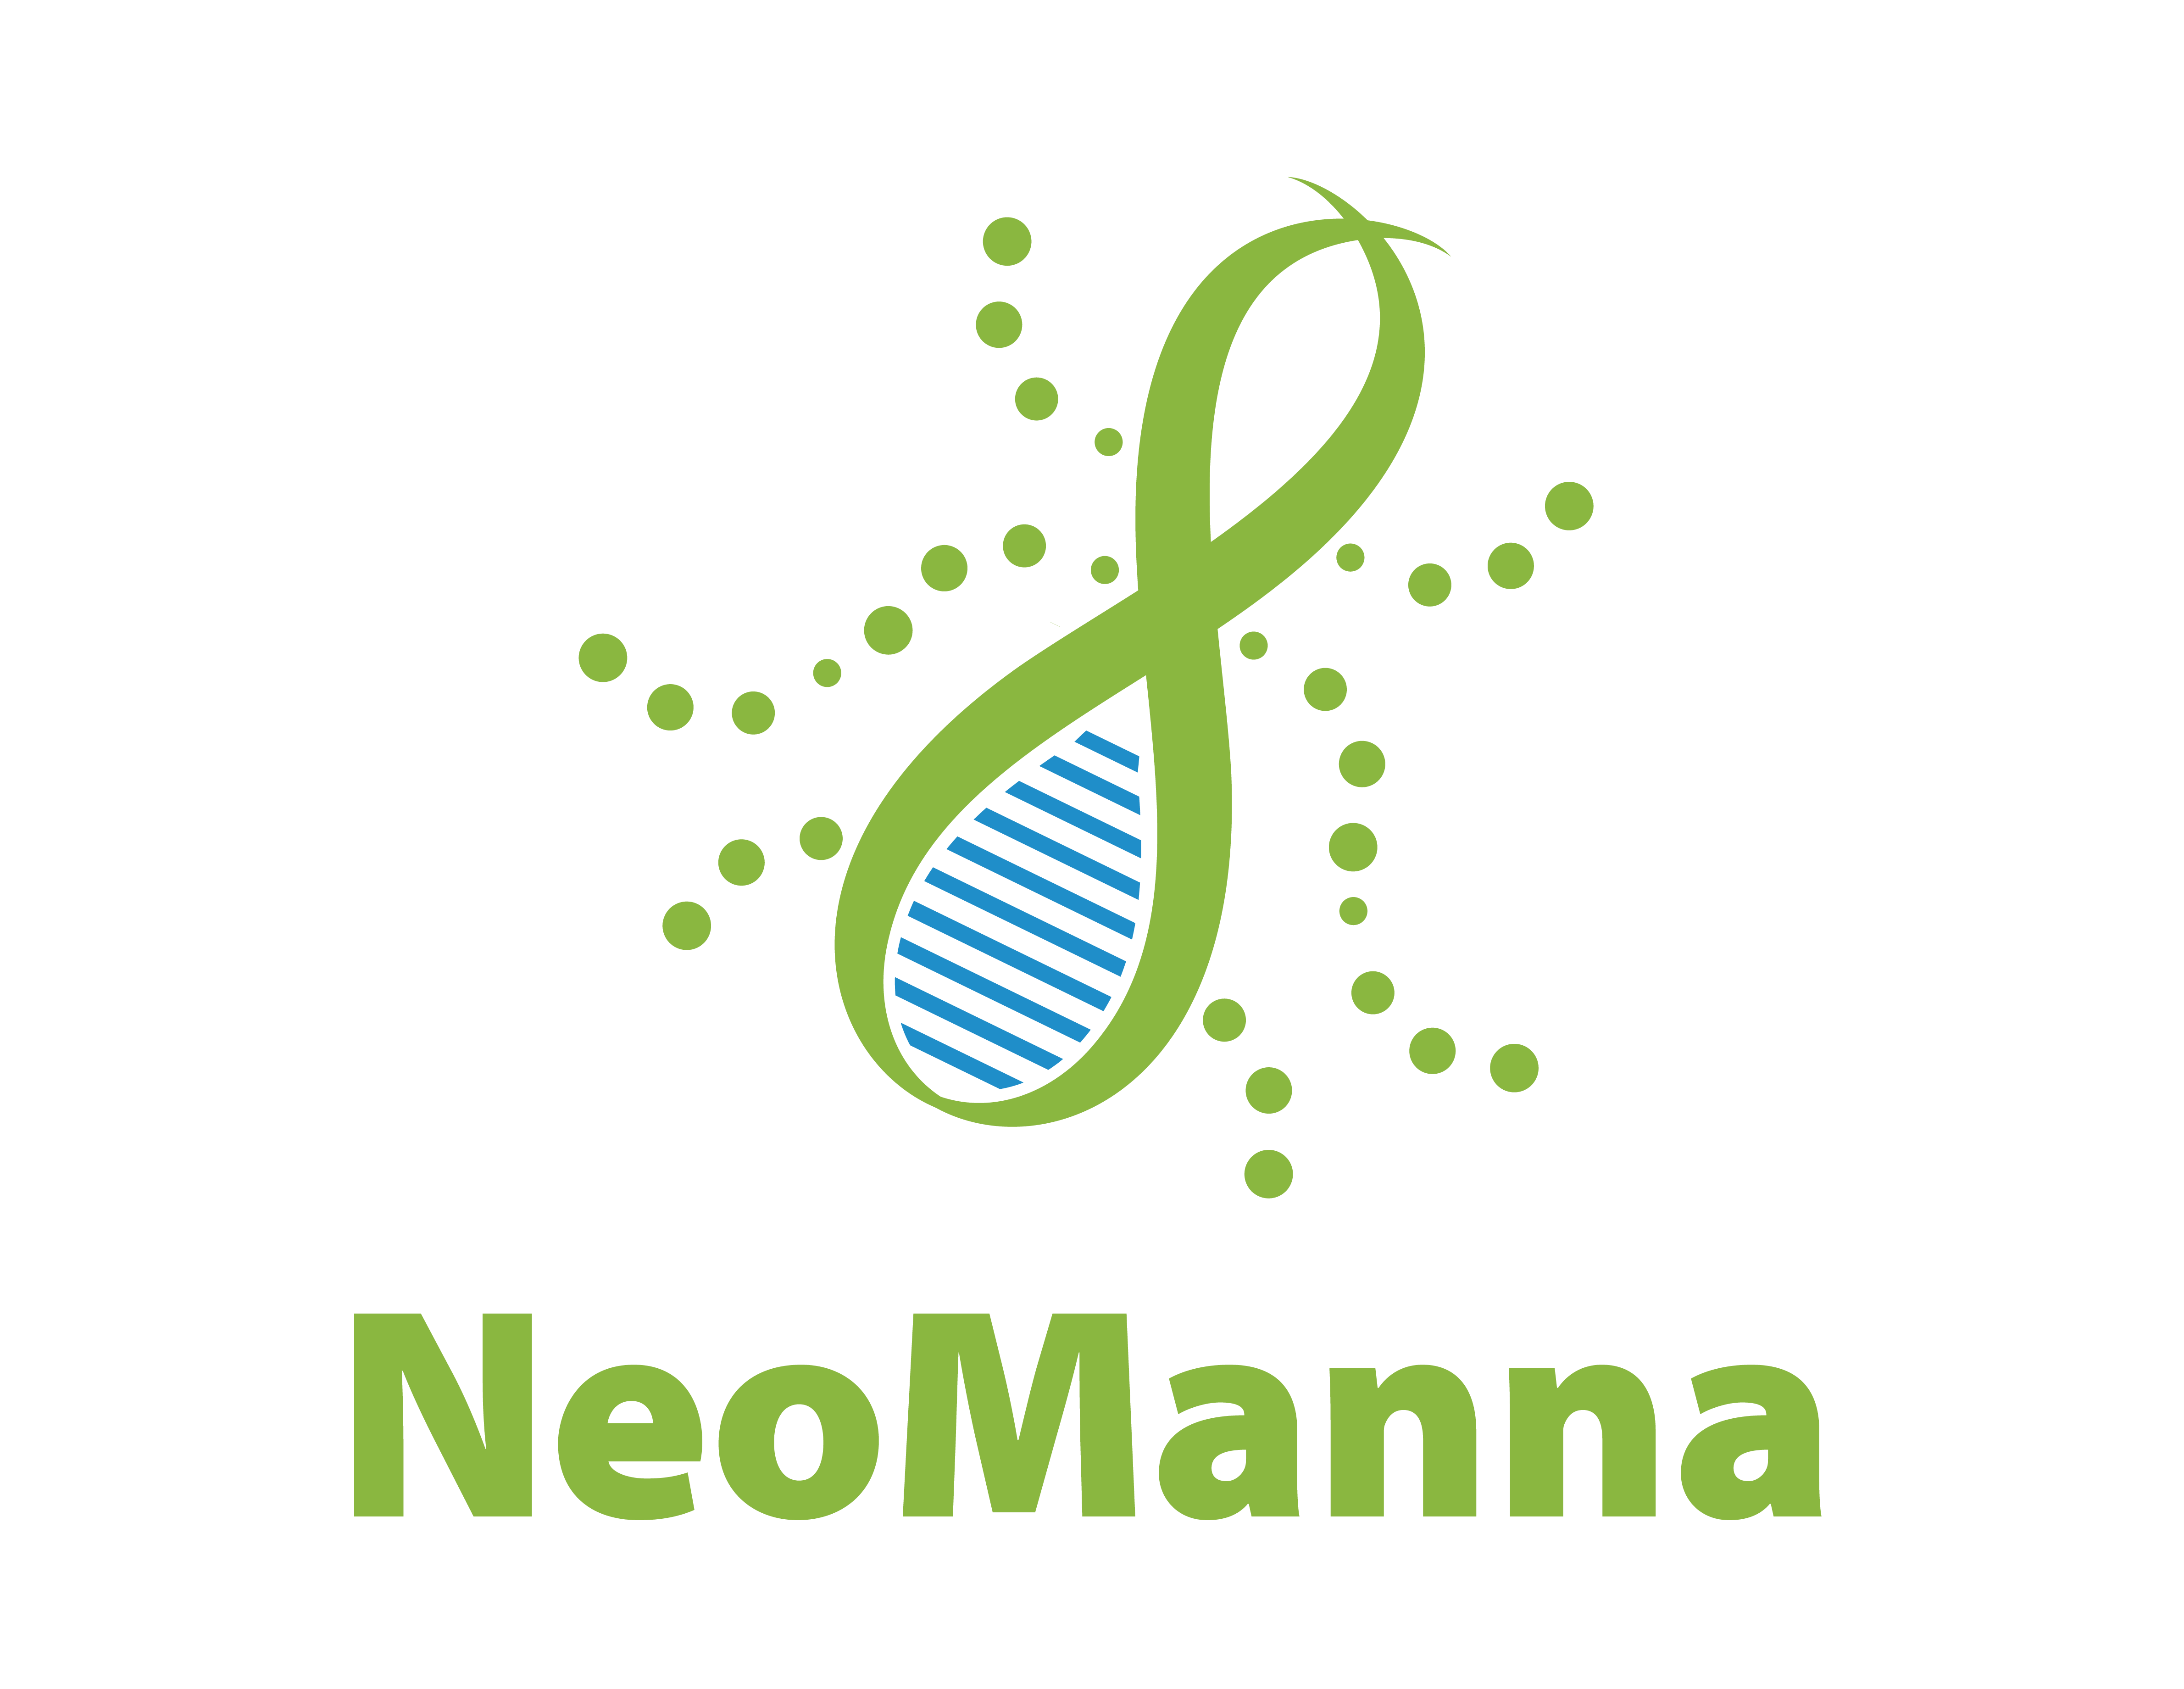 Neomanna Logo